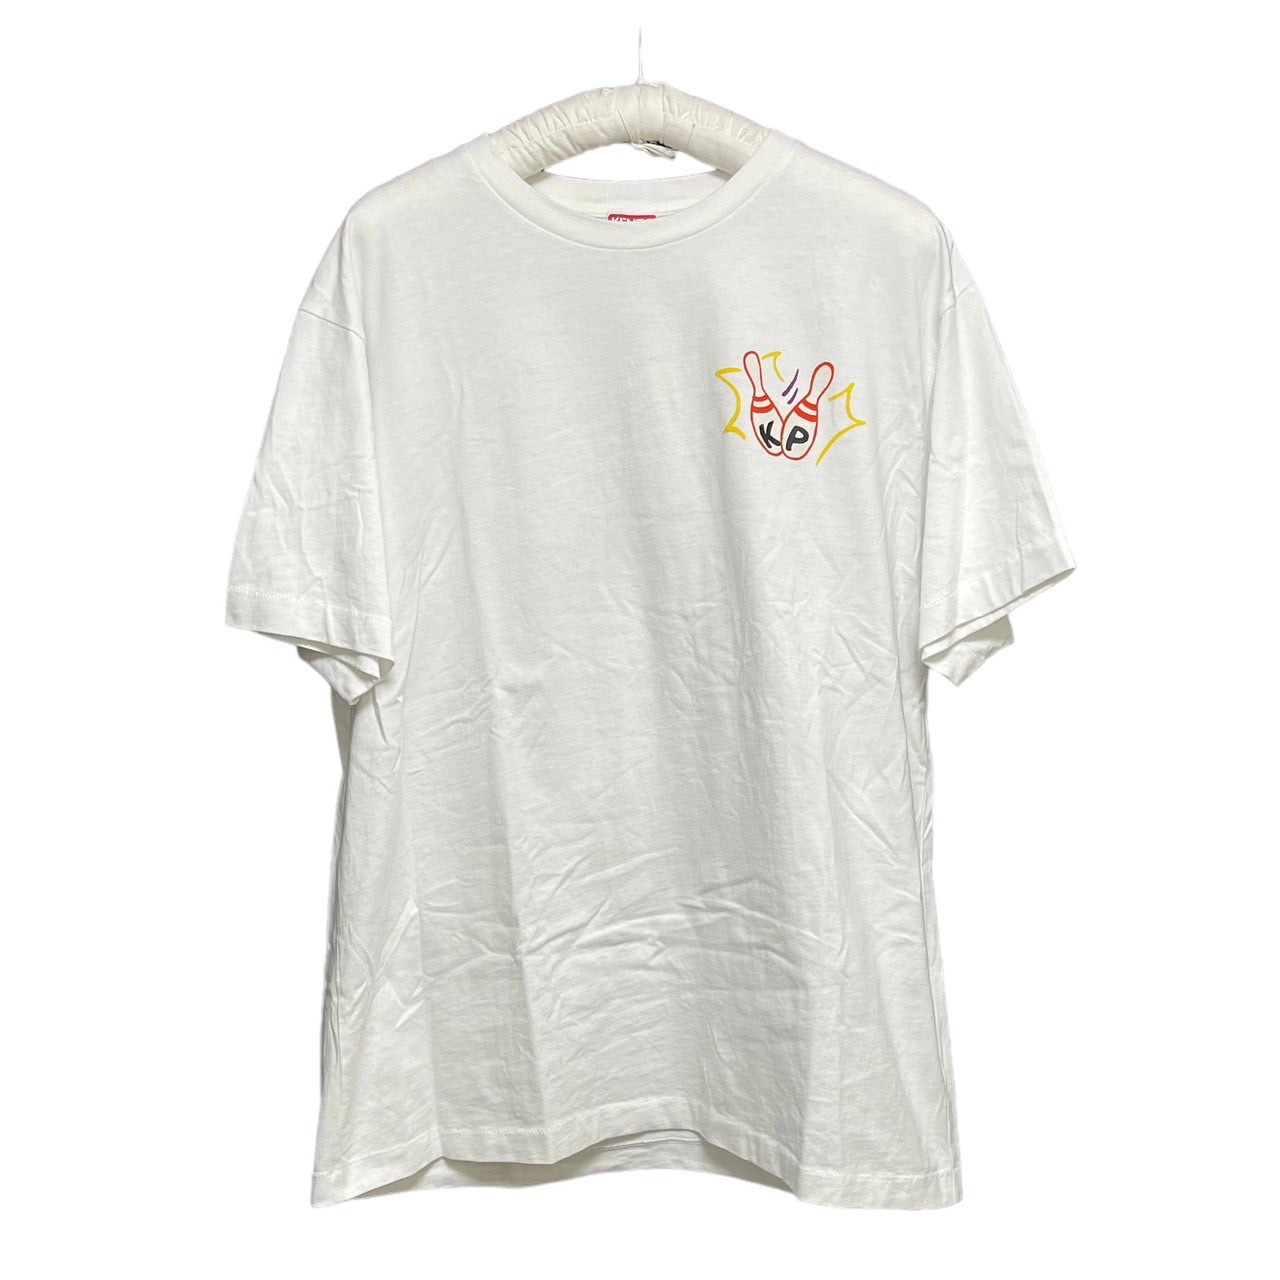 ’KENZO Elephant’ ボーリング オーバーサイズ Tシャツ